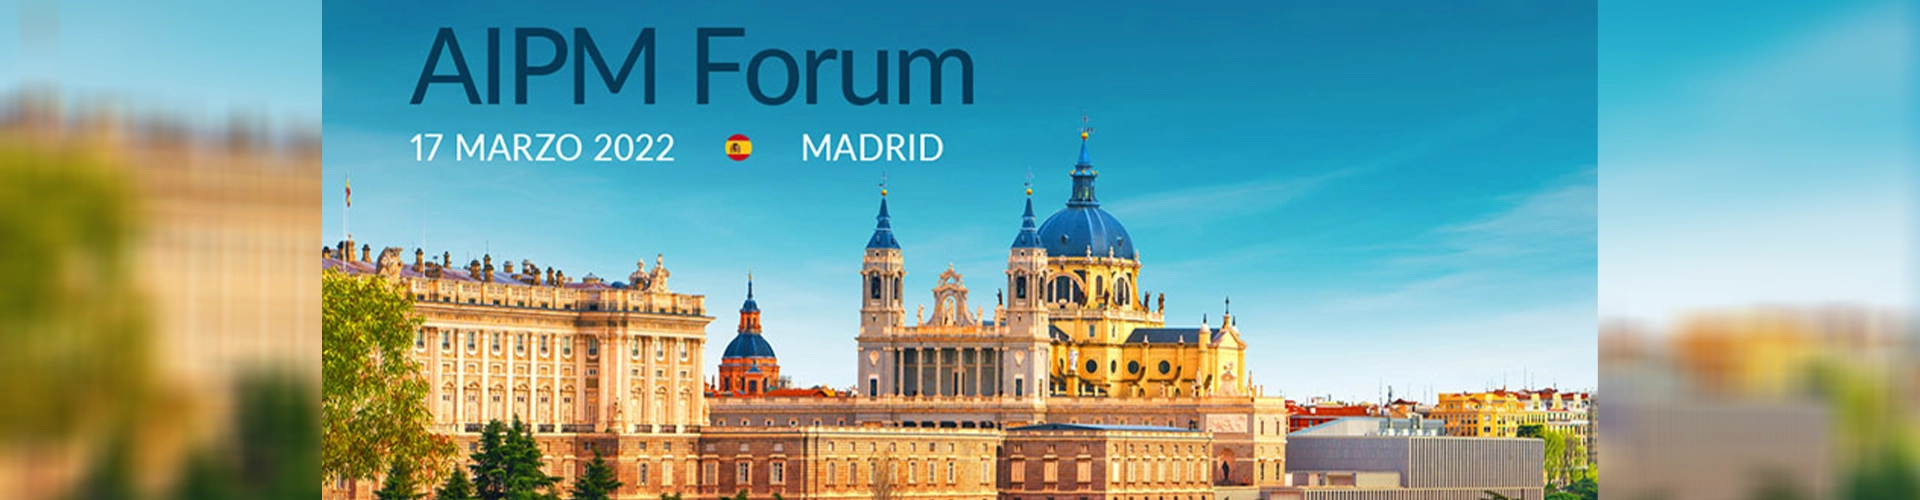 Blog Hero Spanish AIPM Forum - Copperleaf Decision Analytics